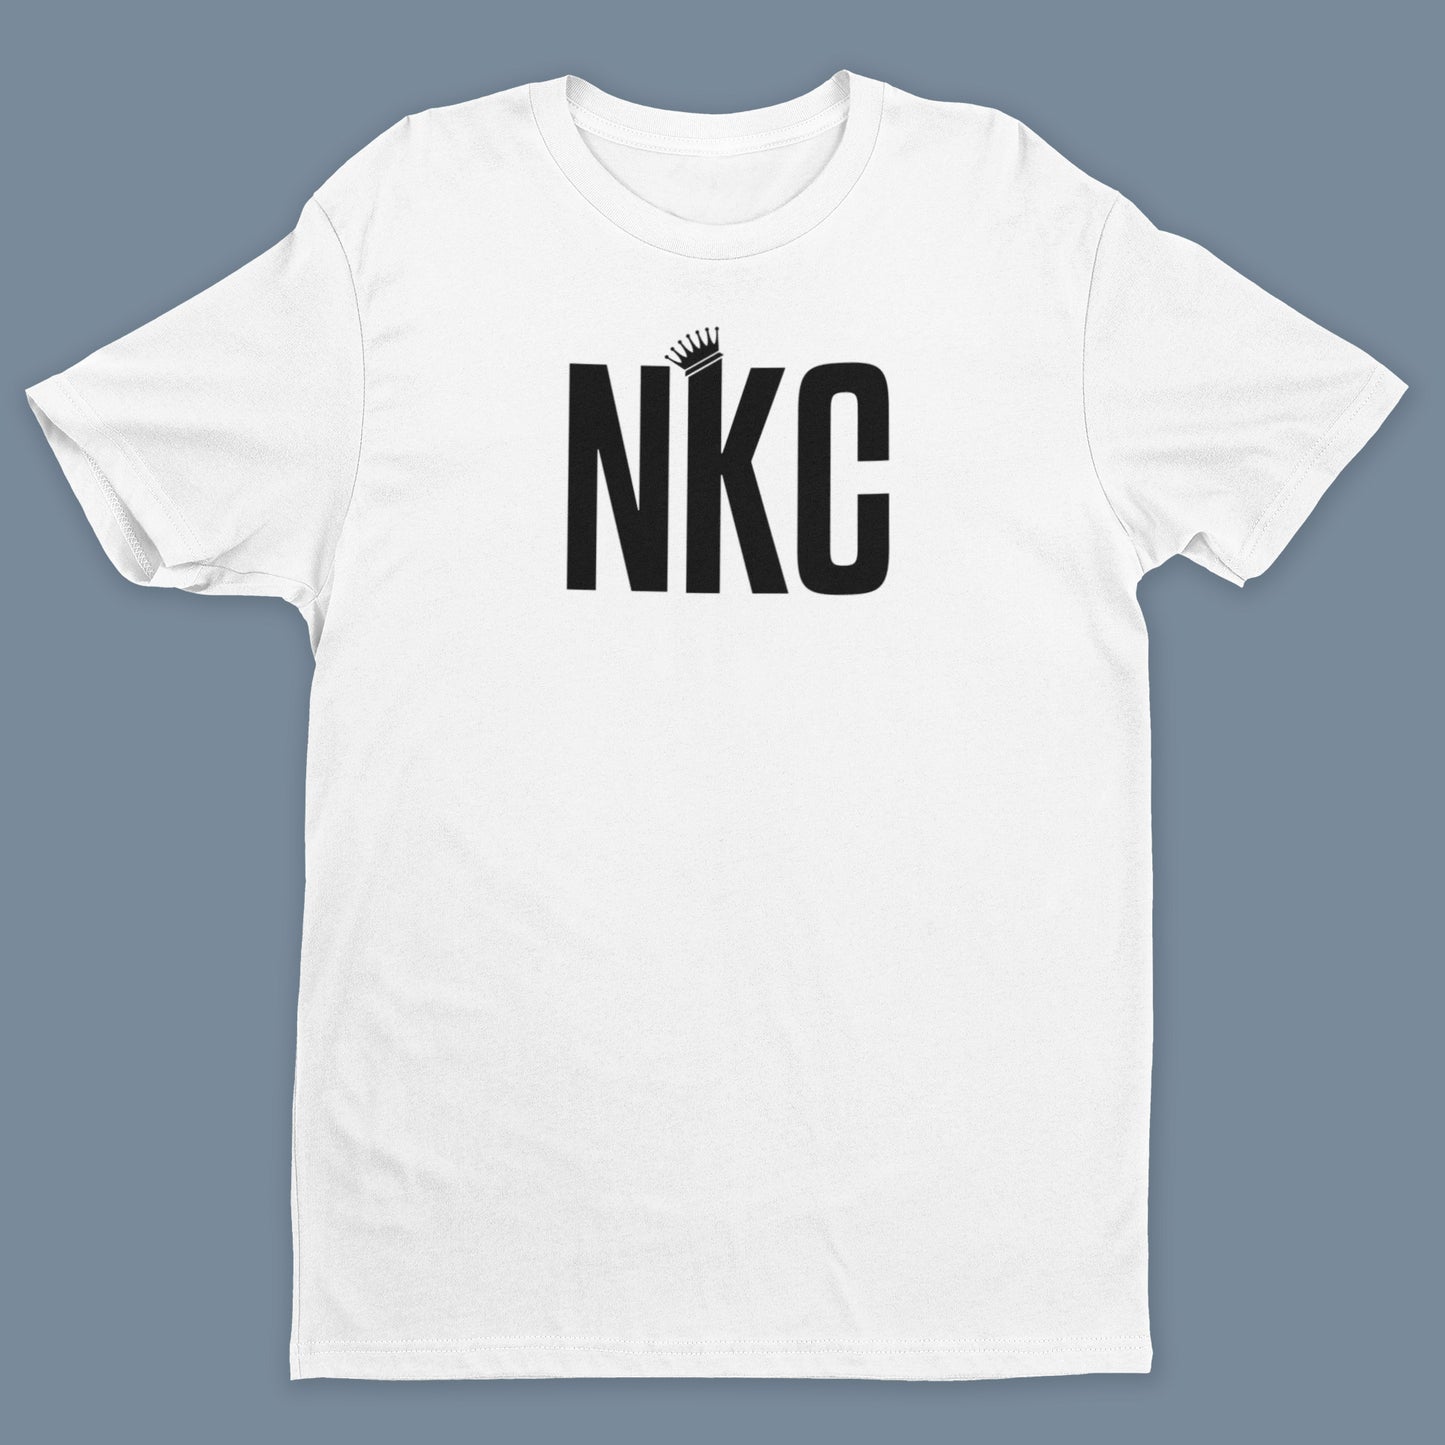 NKC Initial Logo T-Shirt - White